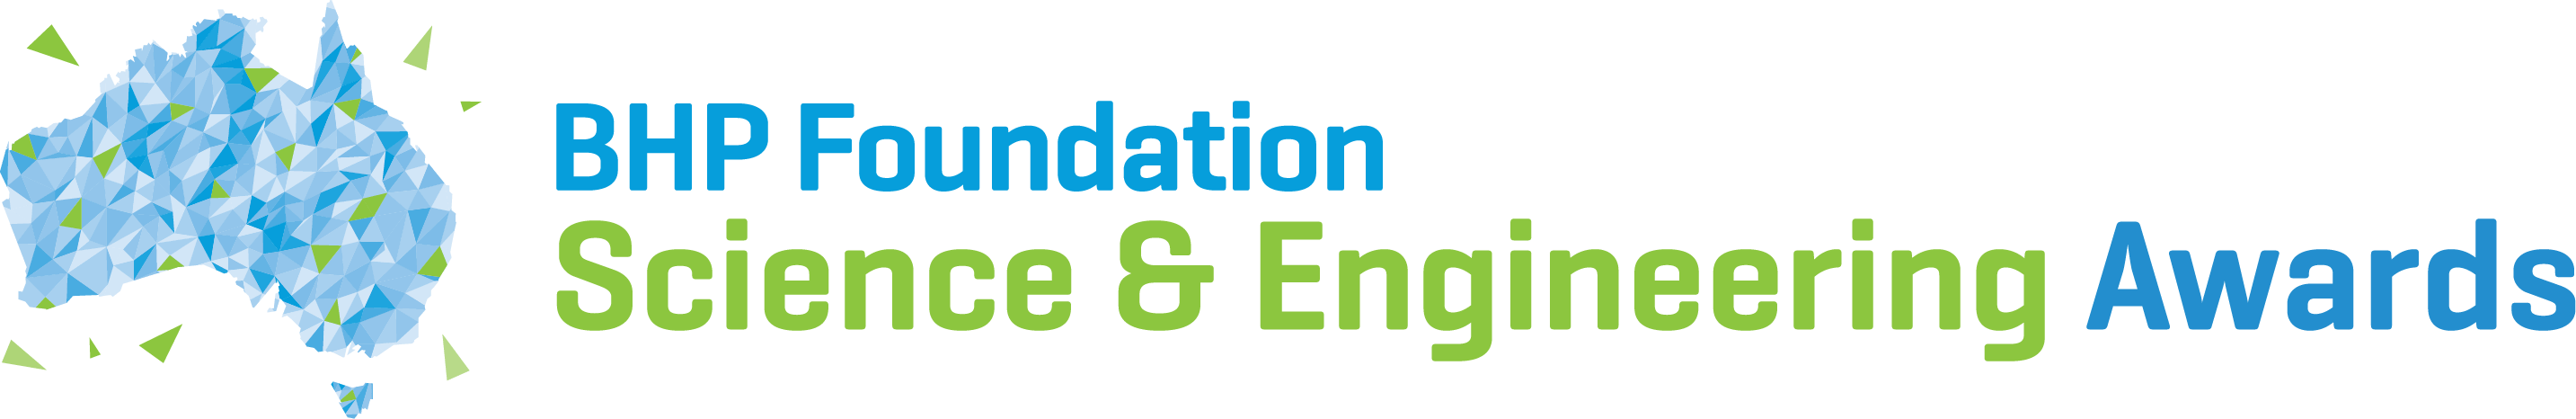 BHP Logo - BHP Foundation Science & Engineering Awards | BHP Science Awards